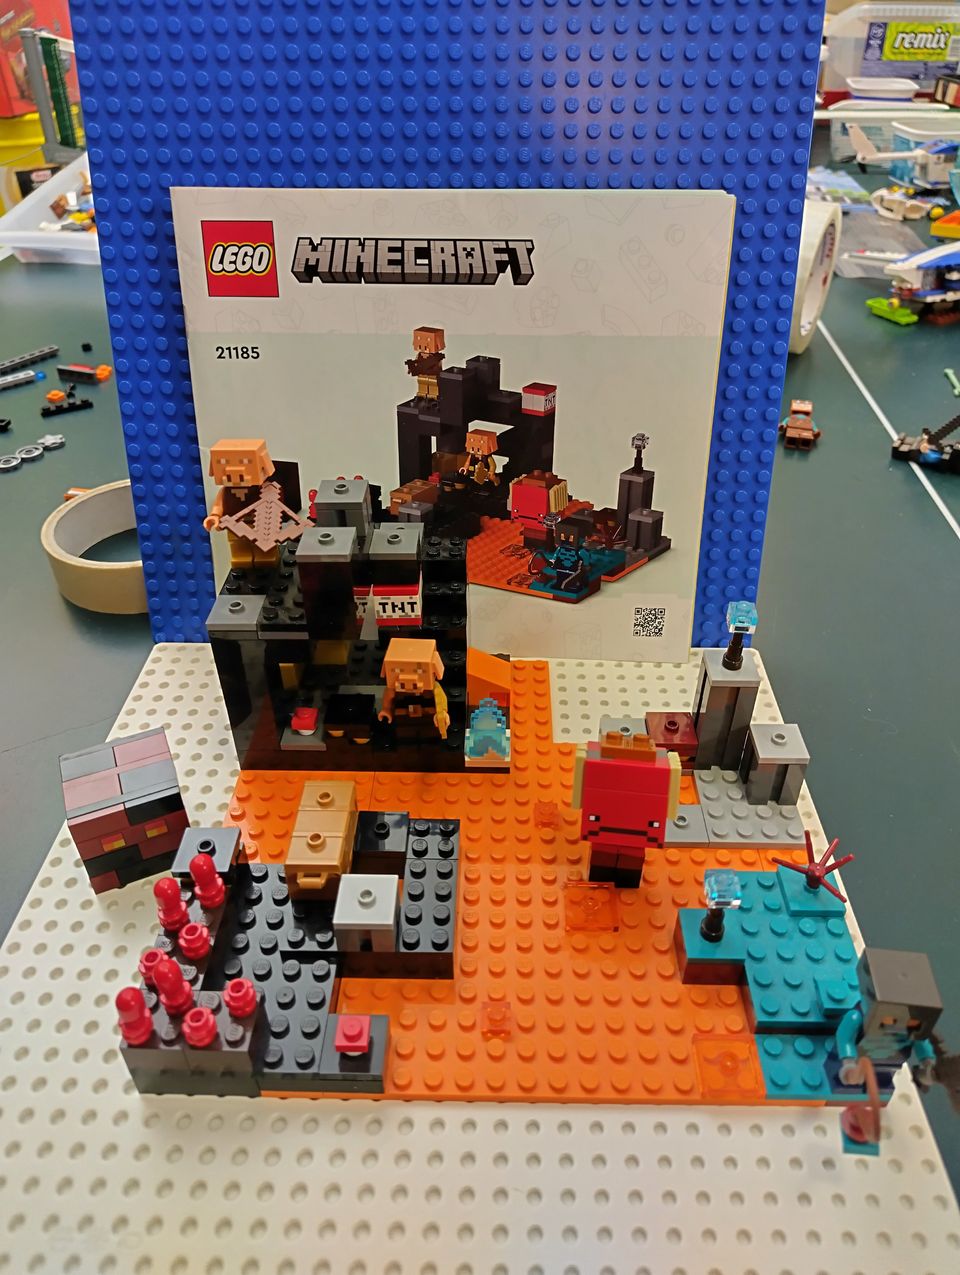 Lego 21185, Minecraft - The Nether Bastion